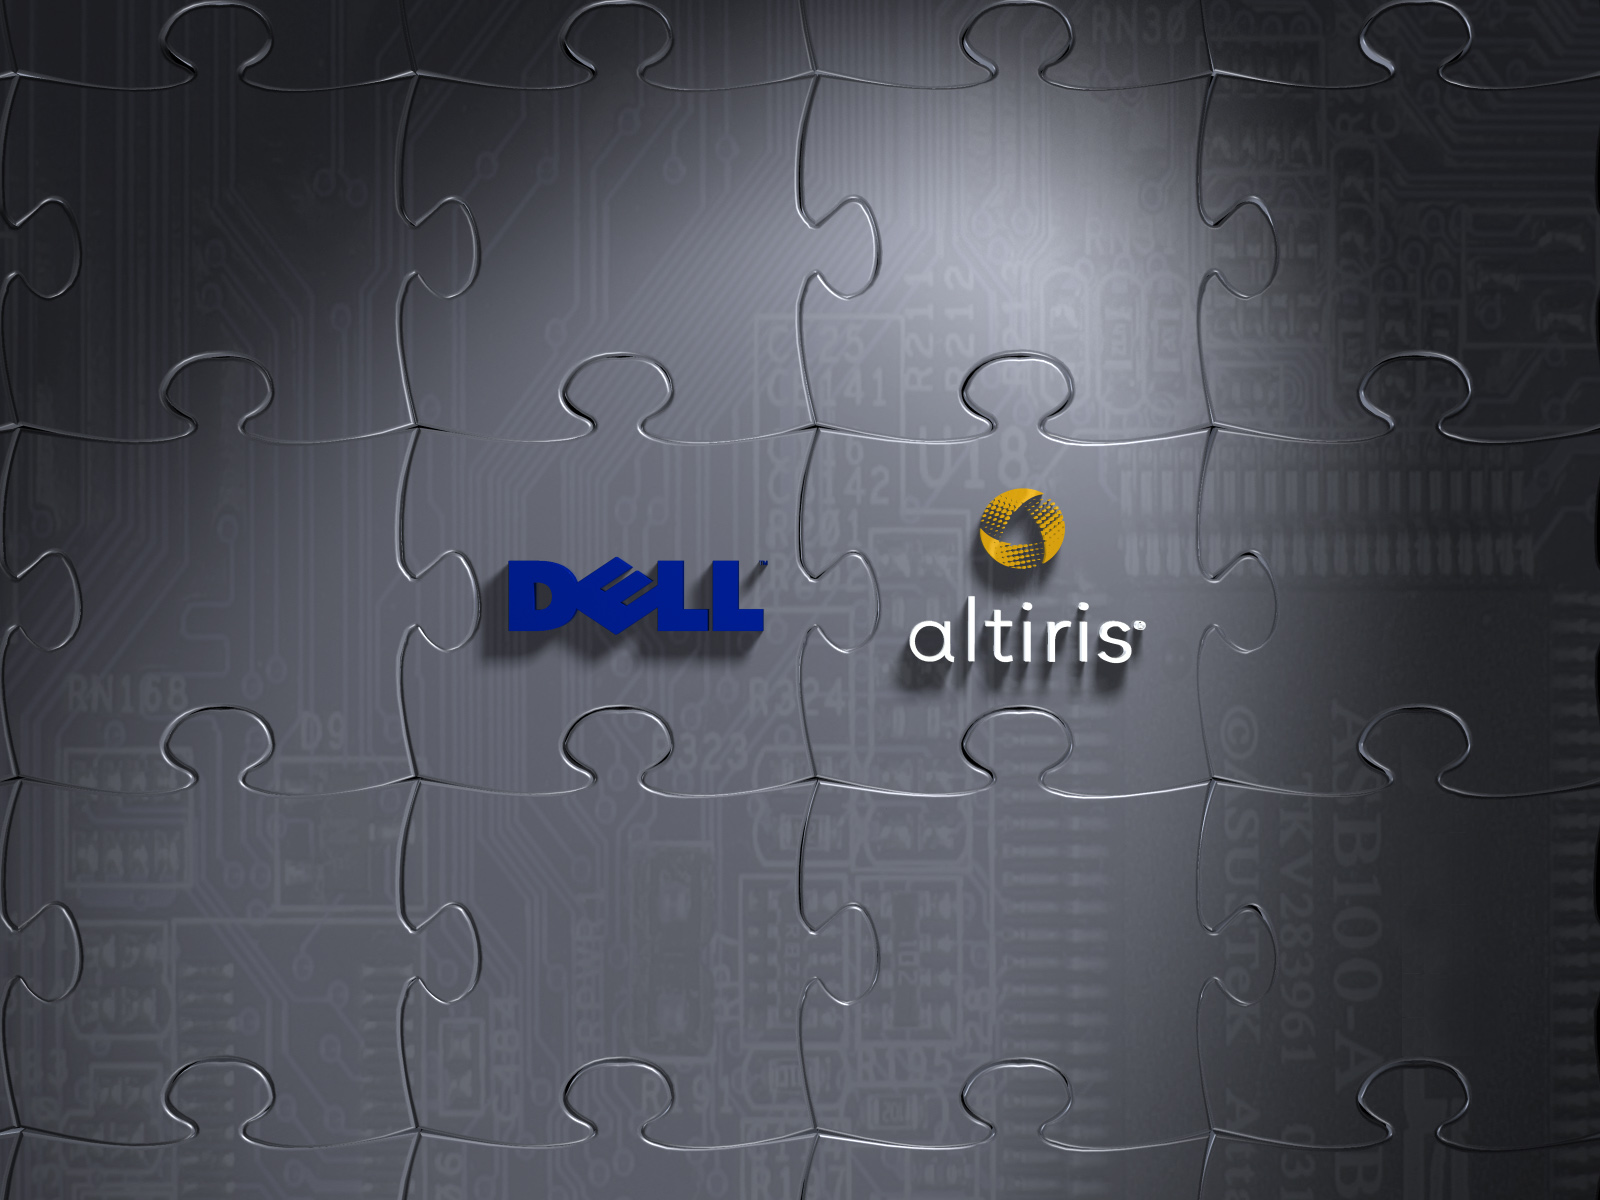 The New Dell Altiris Desktop Wallpaper Jpg